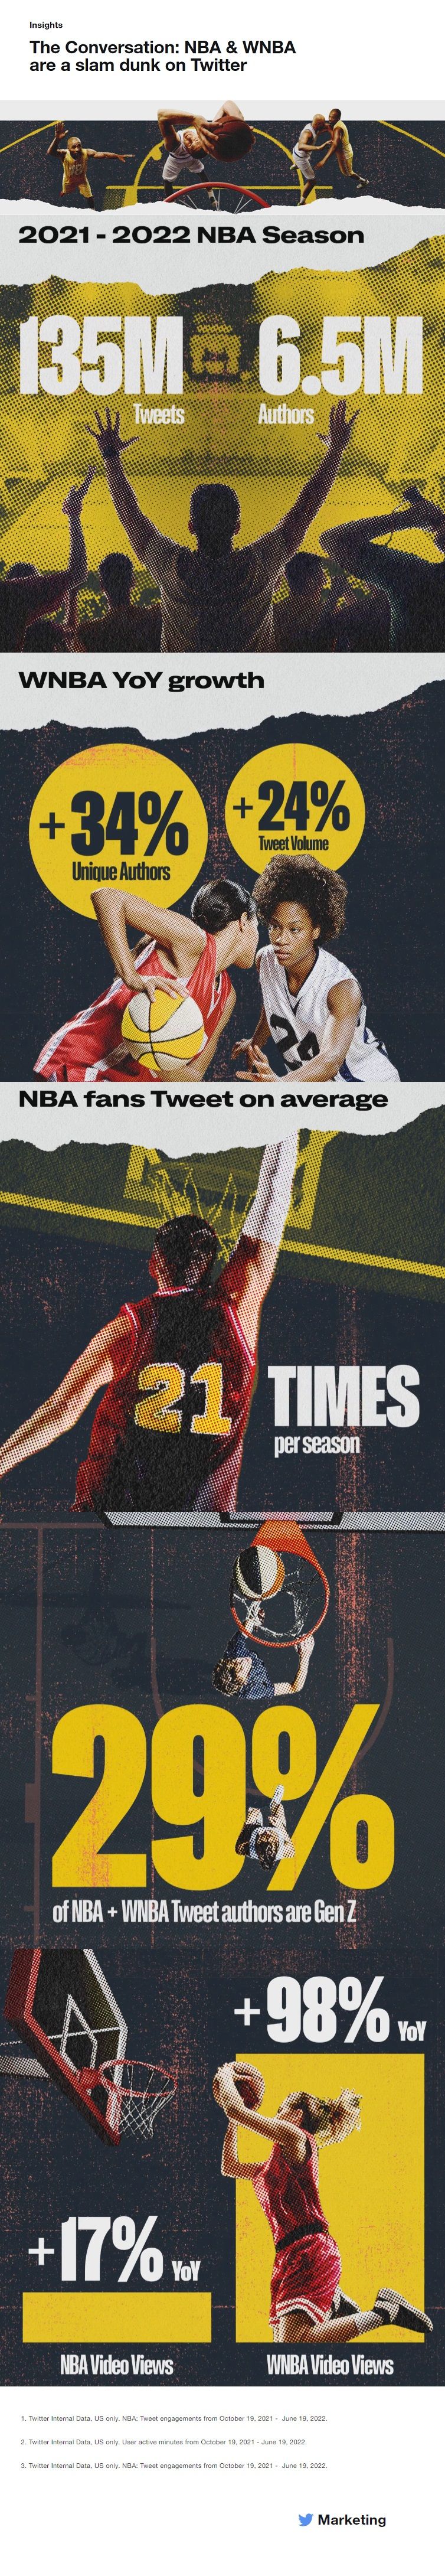 Twitter NBA engagement stats